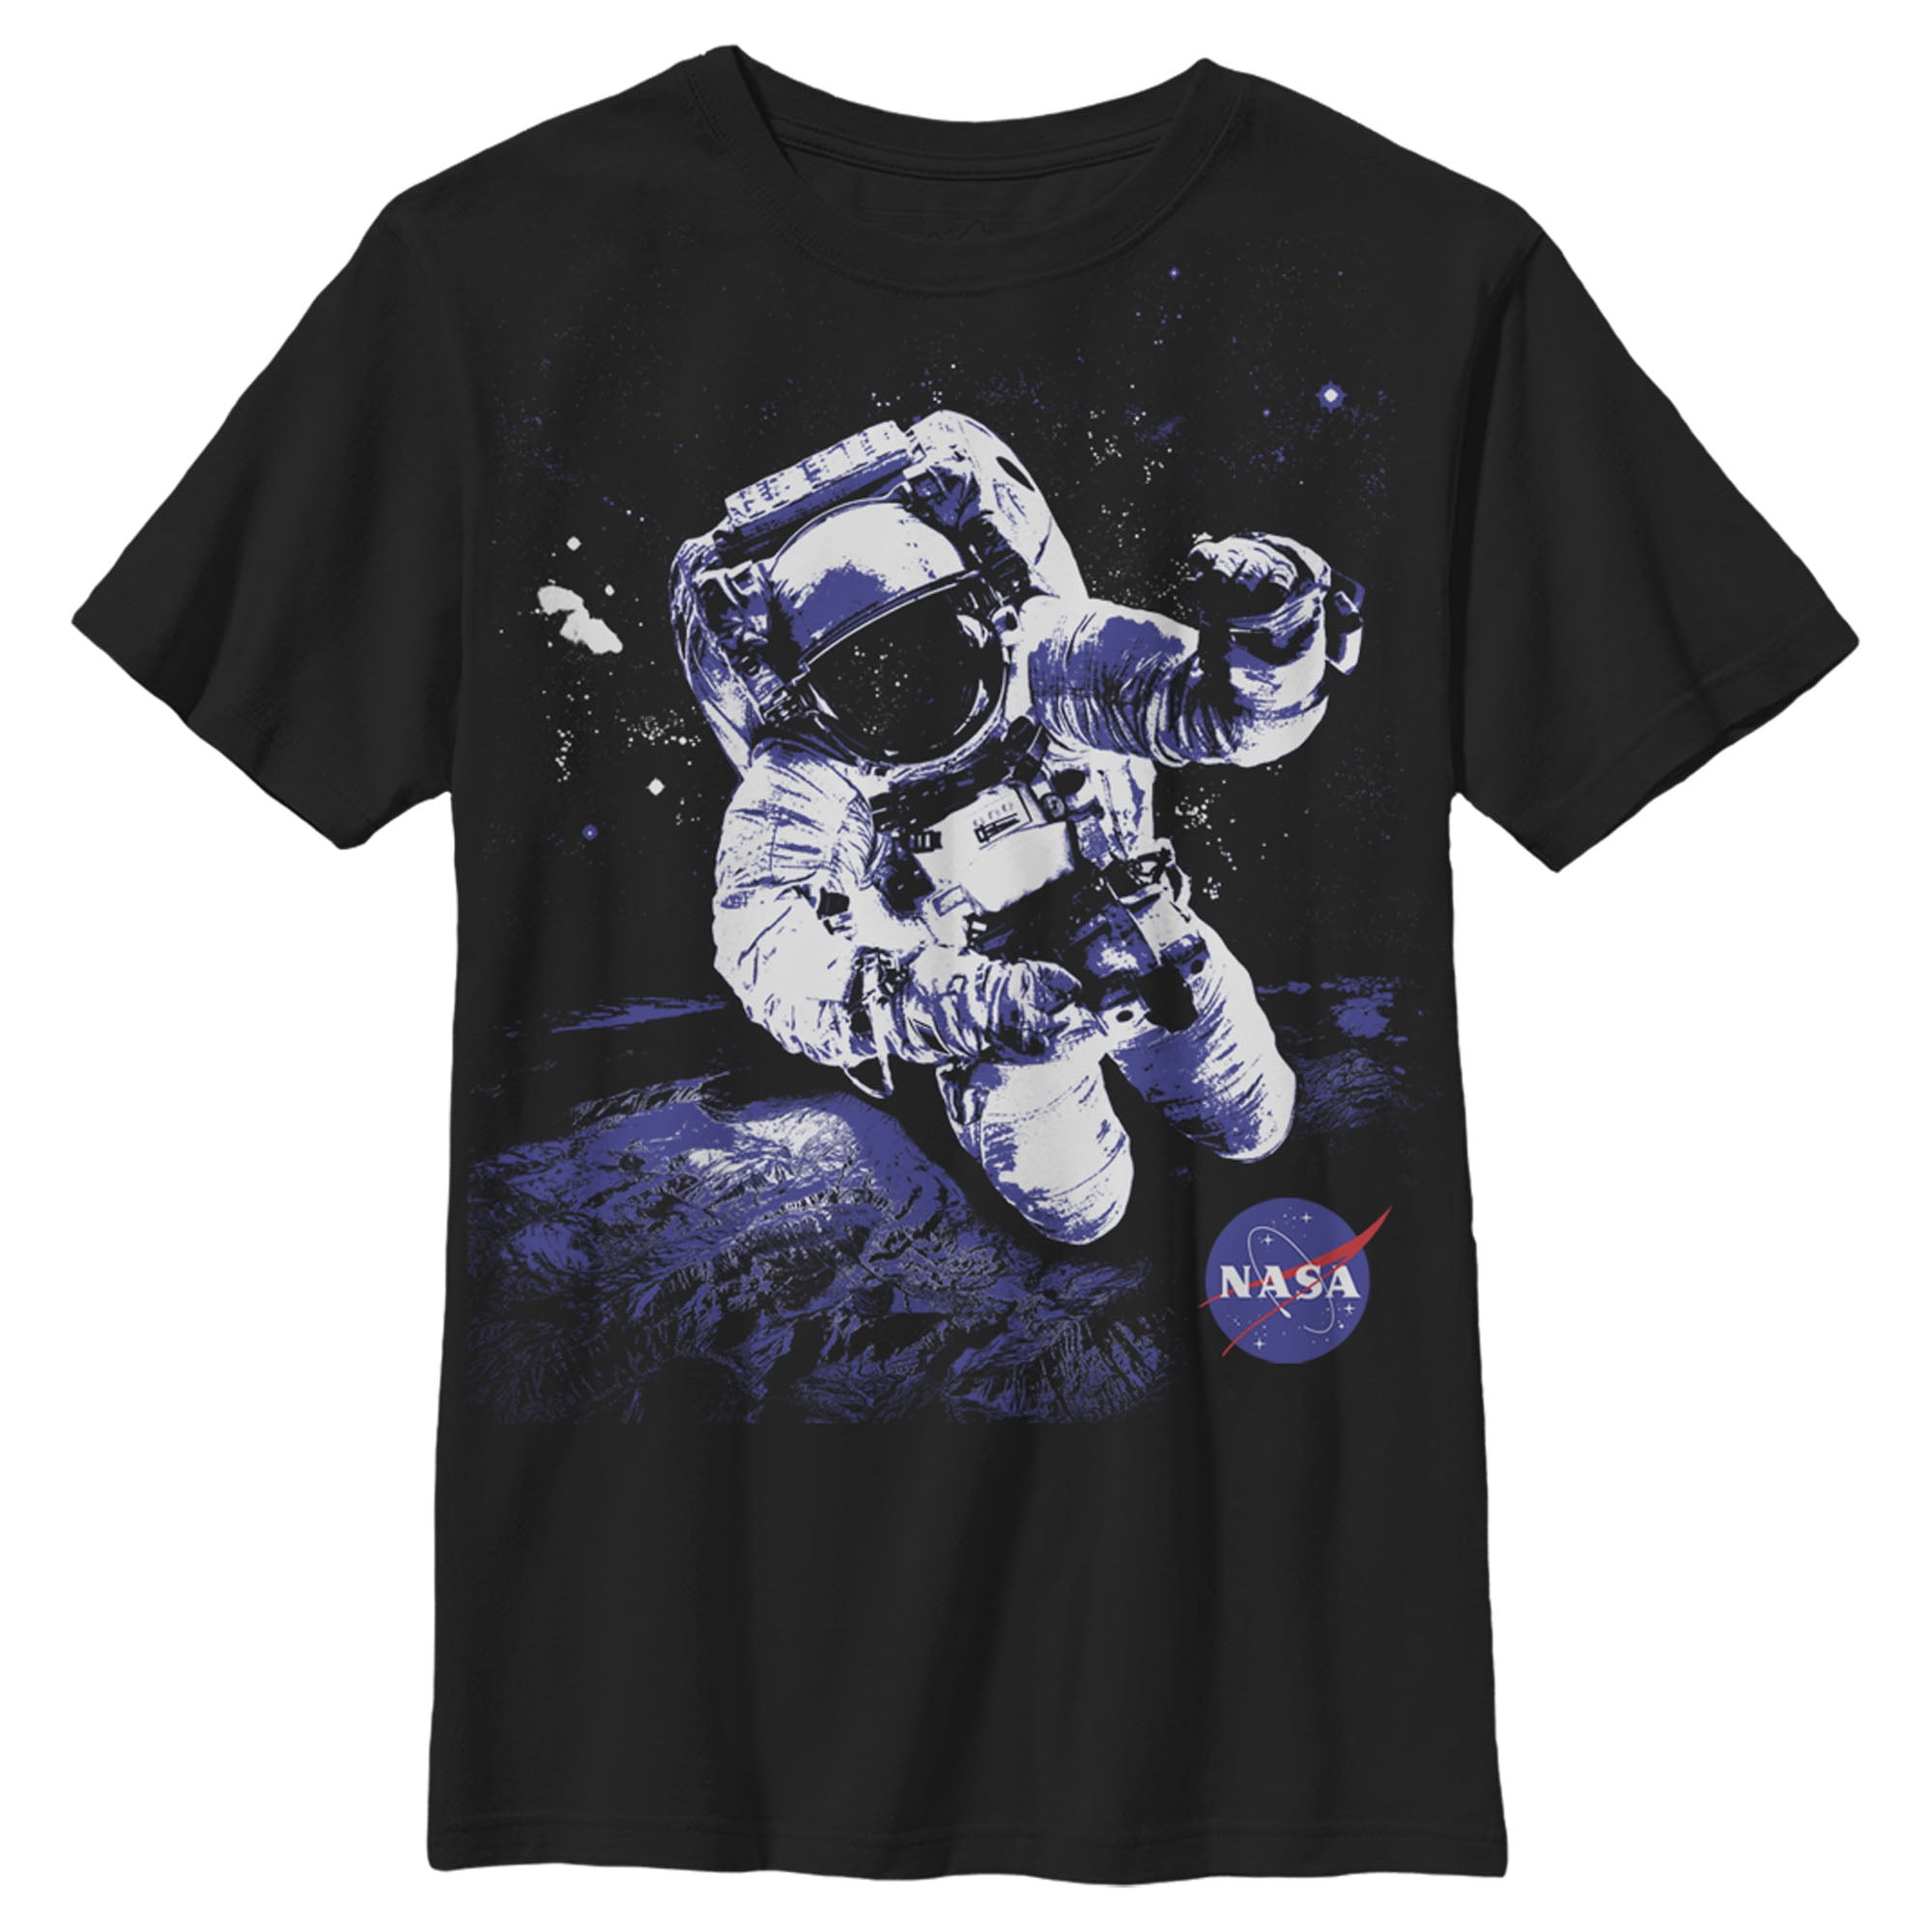 NASA - NASA Boys' Astronaut T-Shirt - Walmart.com - Walmart.com